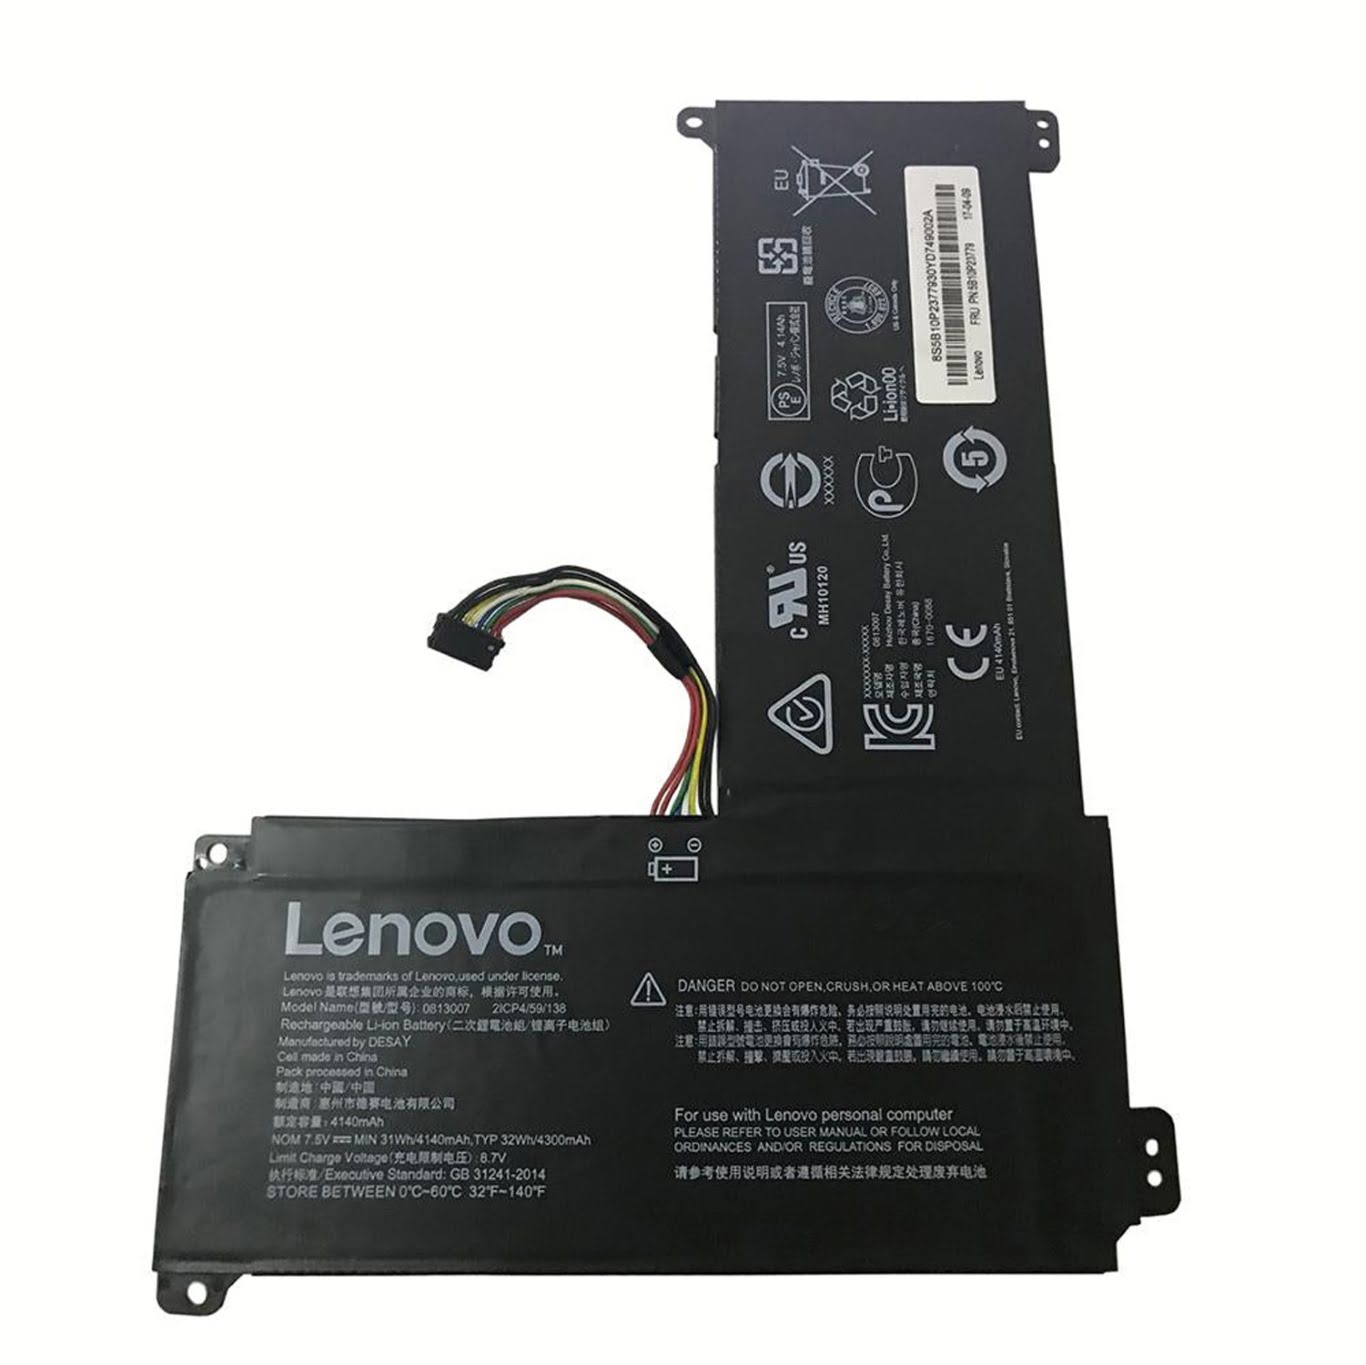 Lenovo 5b10p23779, Bsno3558e5 Laptop Akku Fuer Ideapad 120s-14iap (81a500aqge), Ideapad 120s-14iap (81a500hfge) ersatz